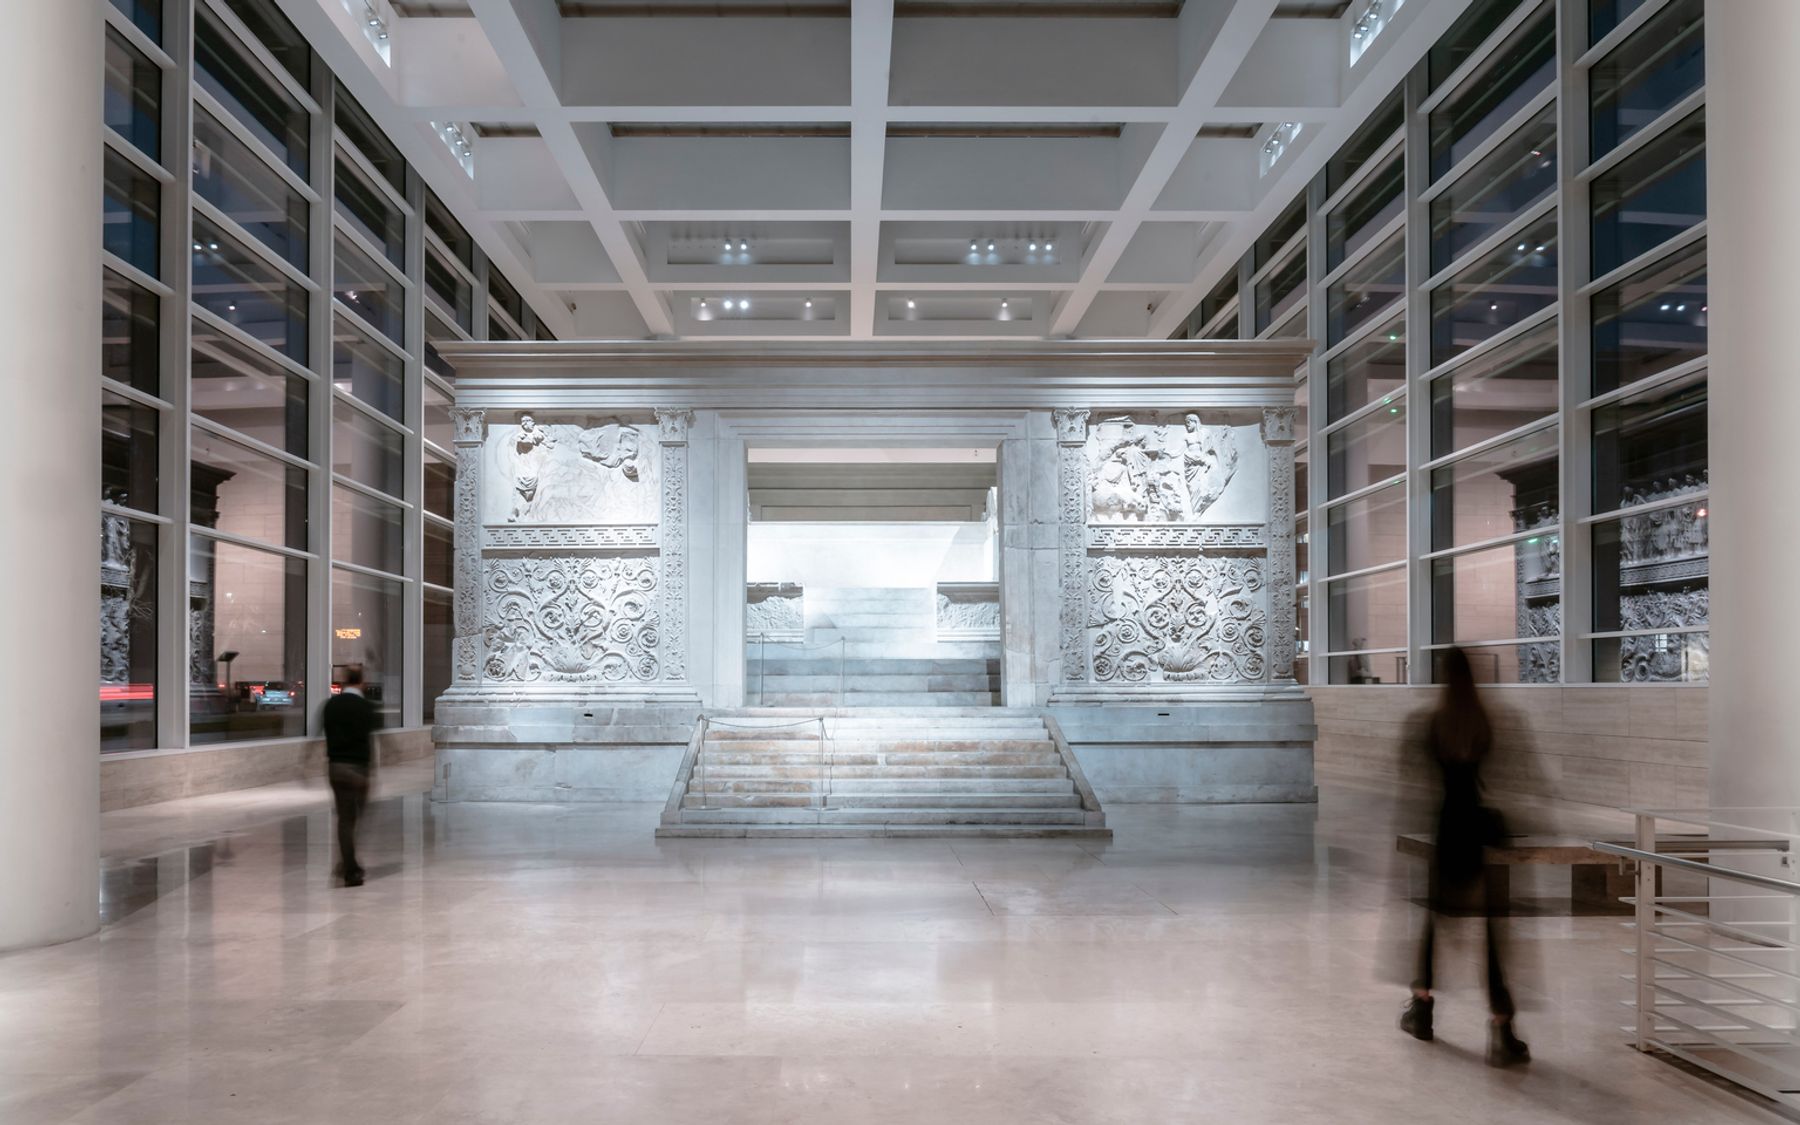 Ara Pacis, Rom Arkitektur: Richard Meier & Partners Architects, New York/USA. Ljusplanering: Fisher Marantz Stone, New York. Foto: Marcela Schneider Ferreira, Florens.